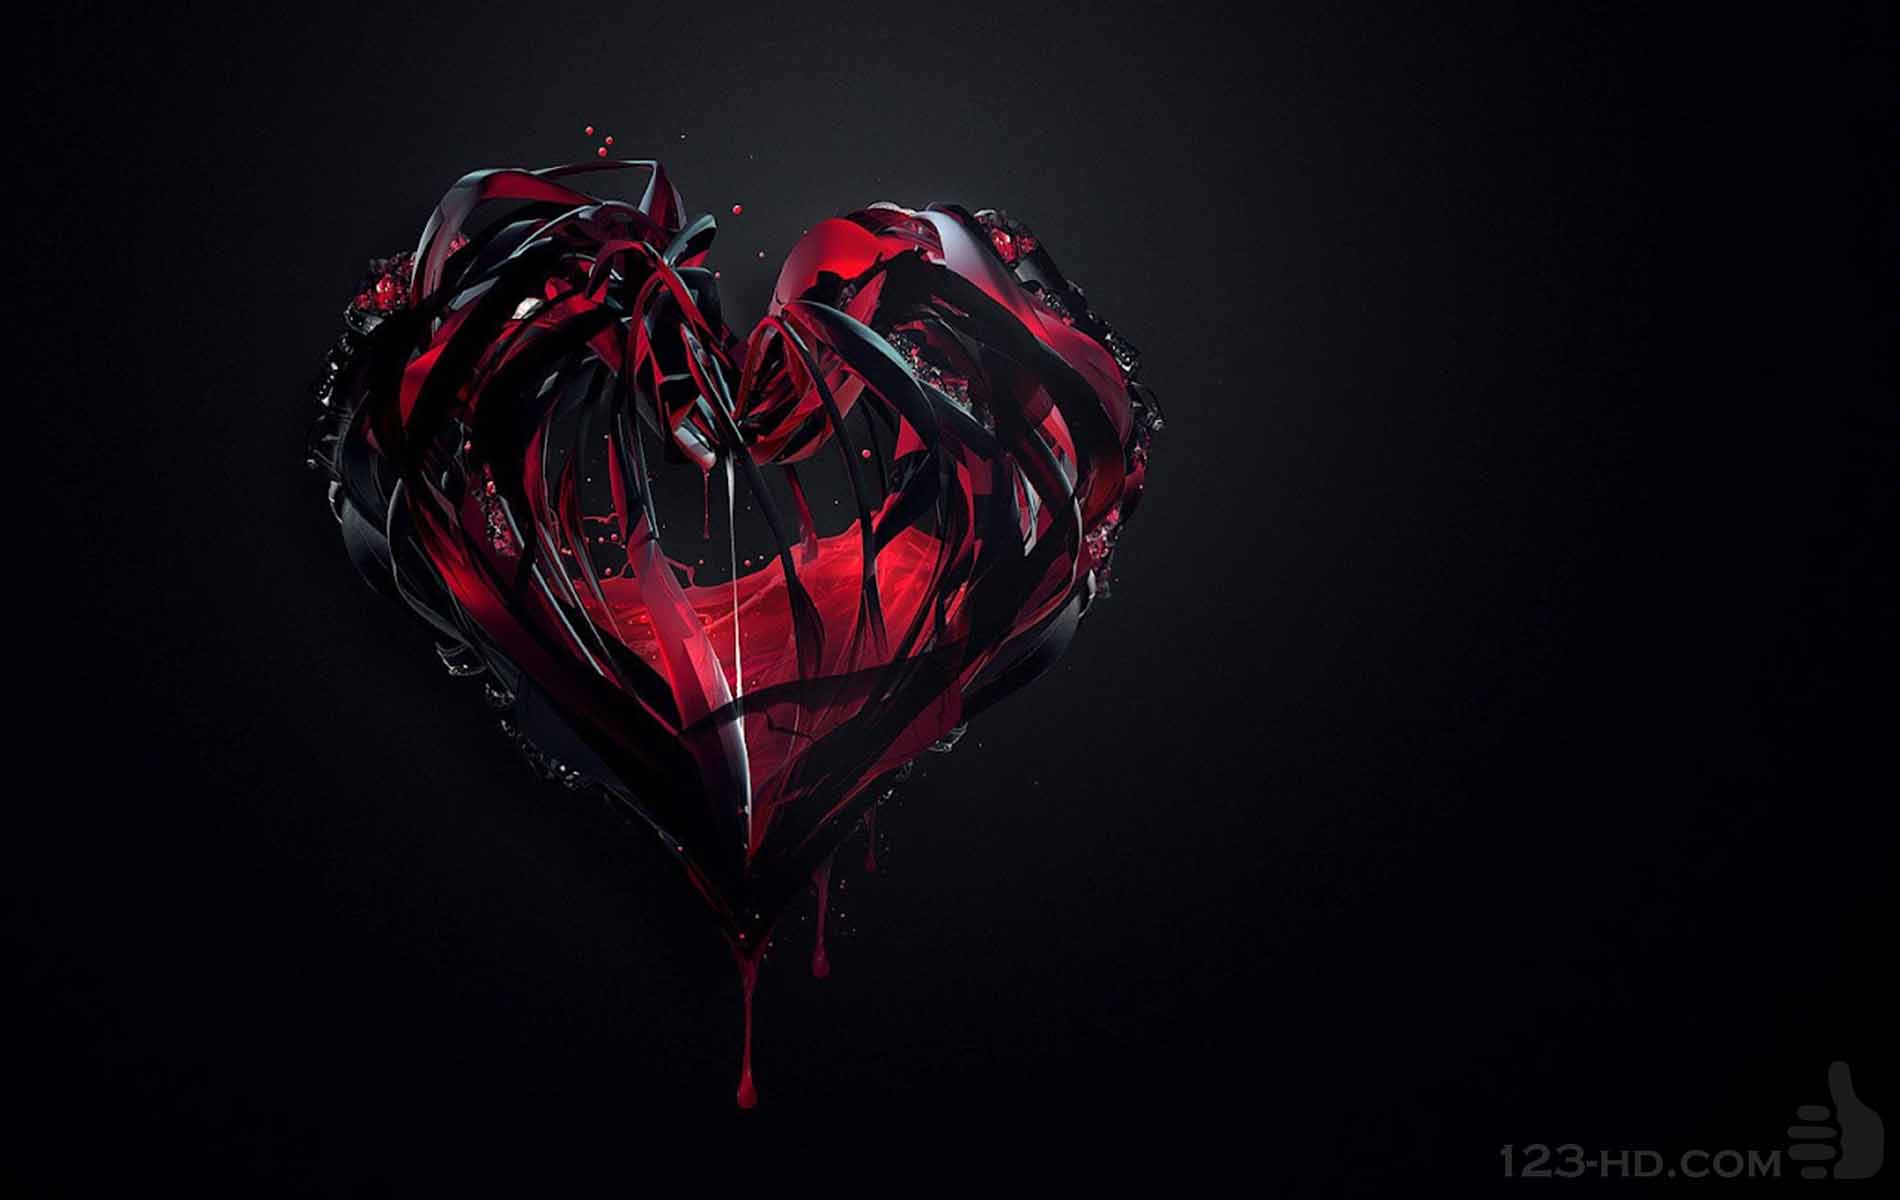 Arriba 199+ imagem red heart in black background - Thcshoanghoatham ...